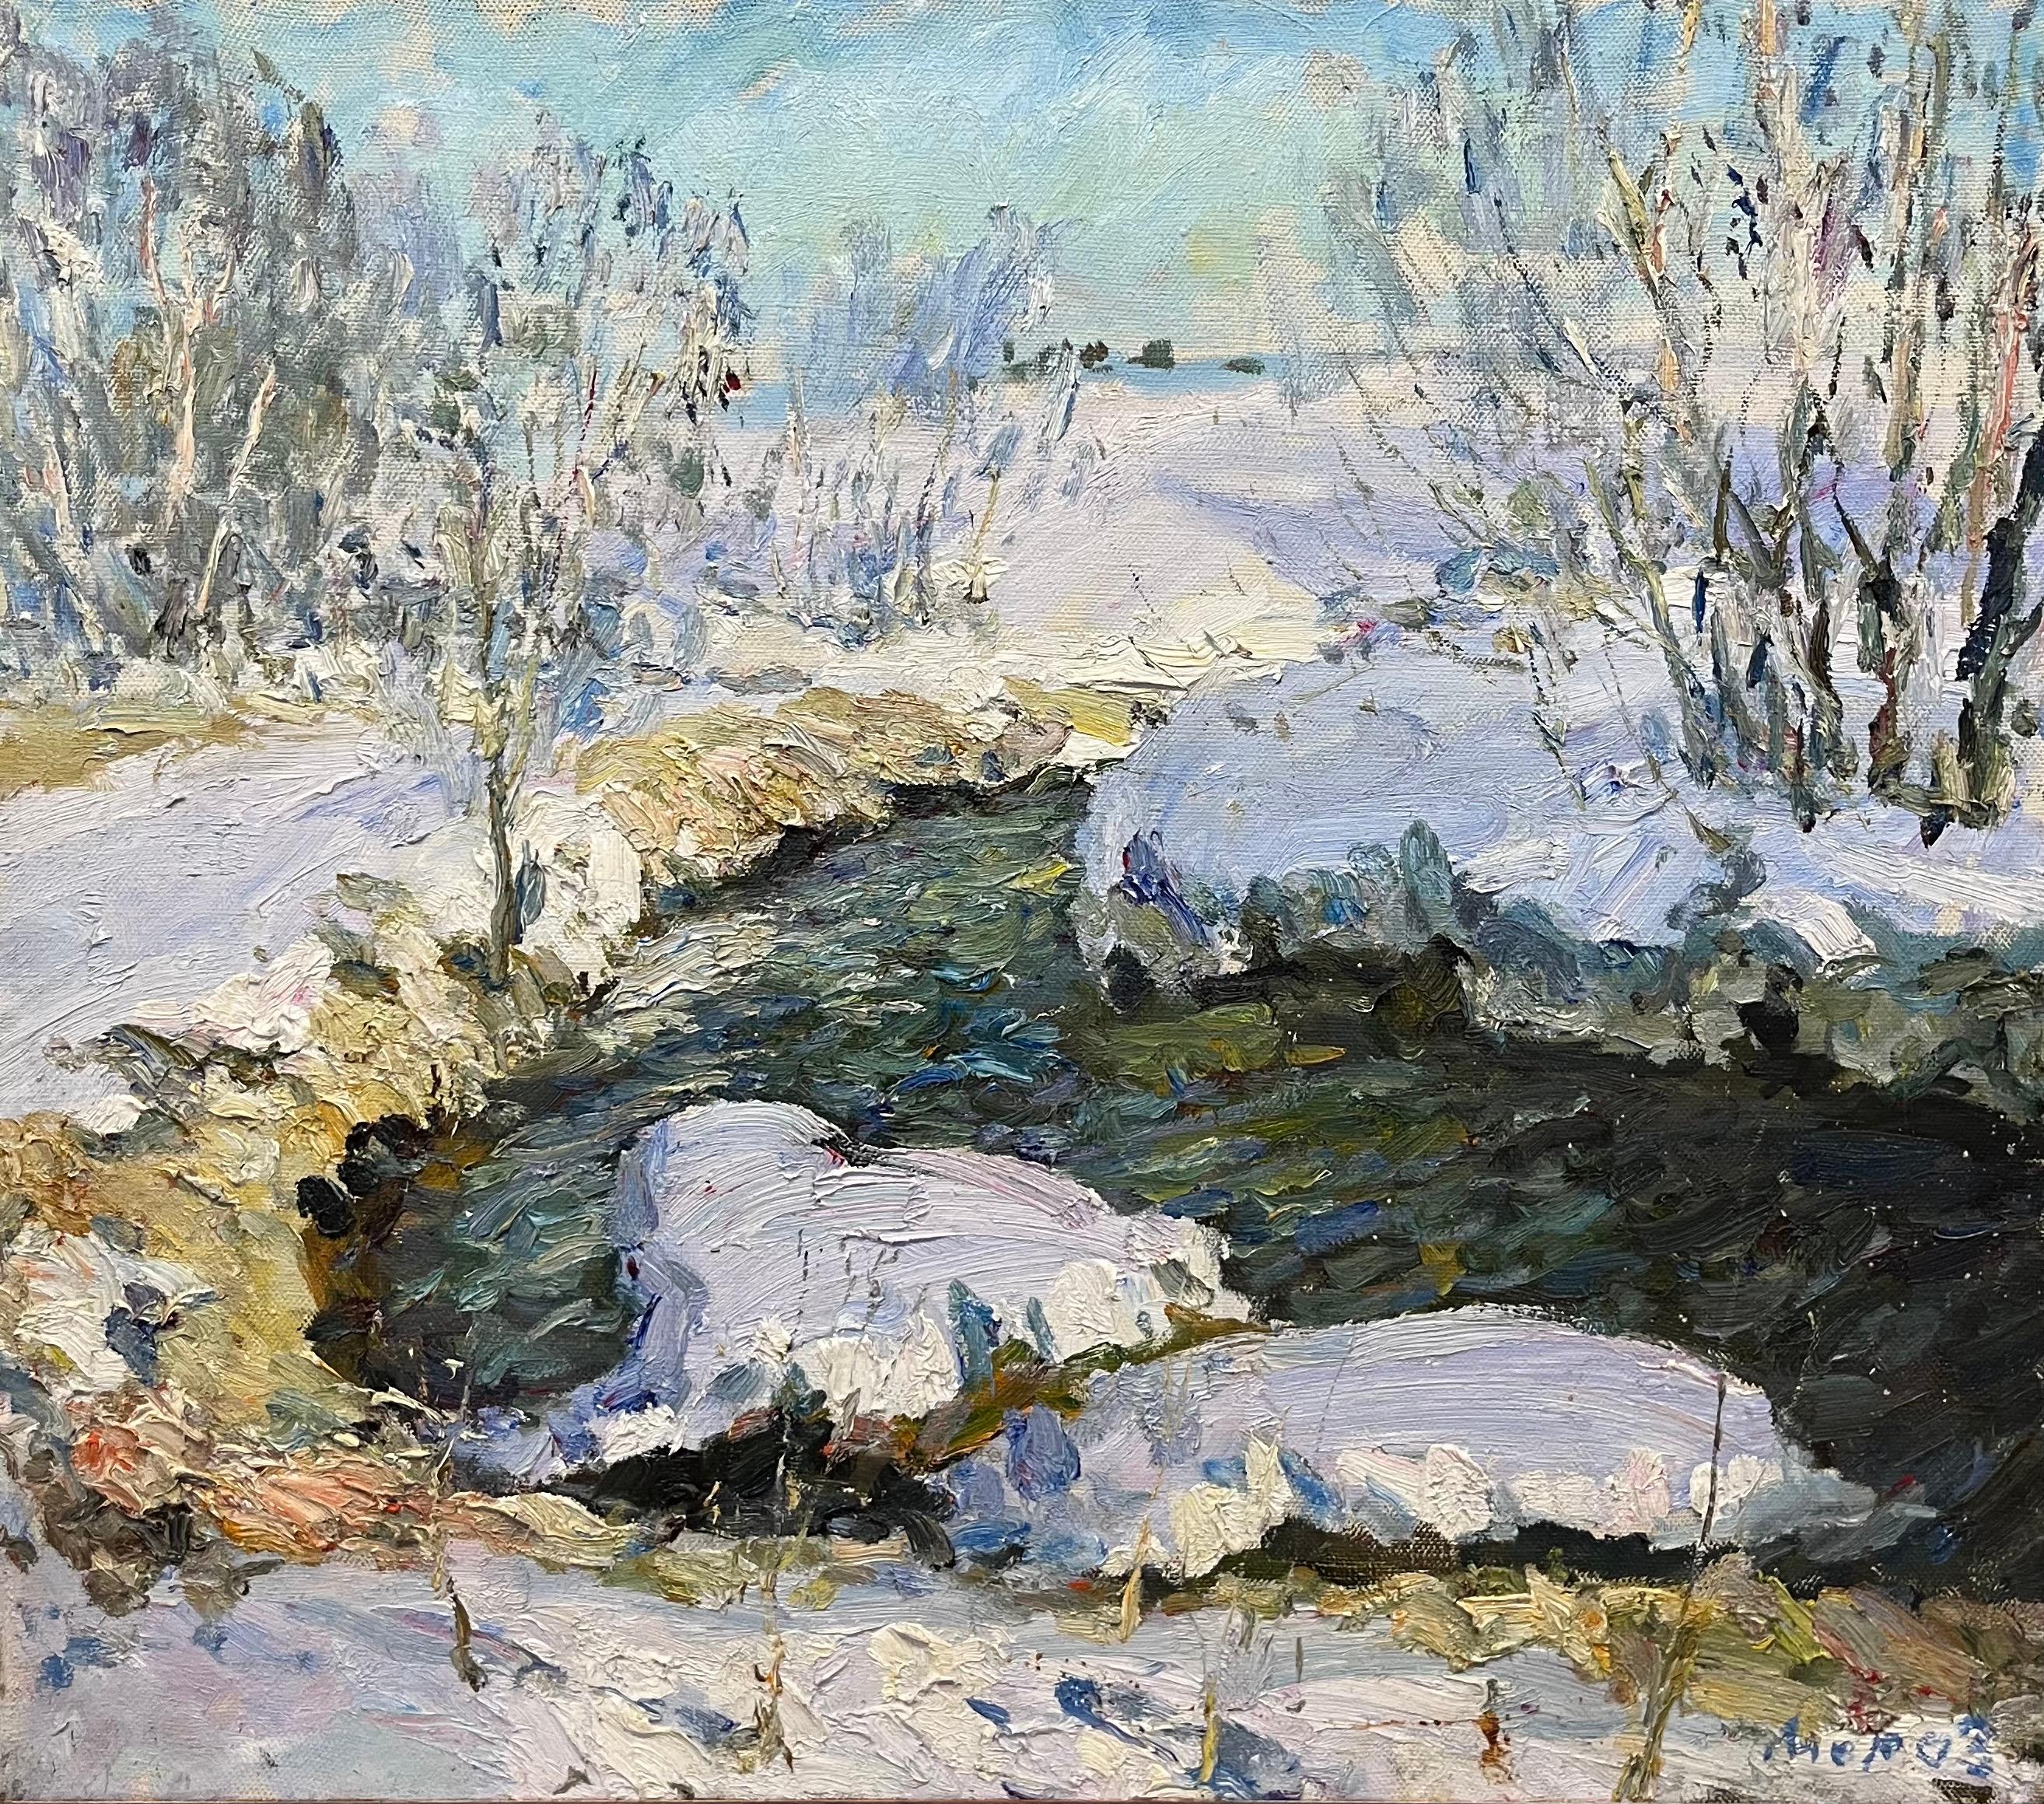 Georgij Moroz Landscape Painting - "Stream illuminated by the sun"Winter, light, snow cm. 97 x 85 1999